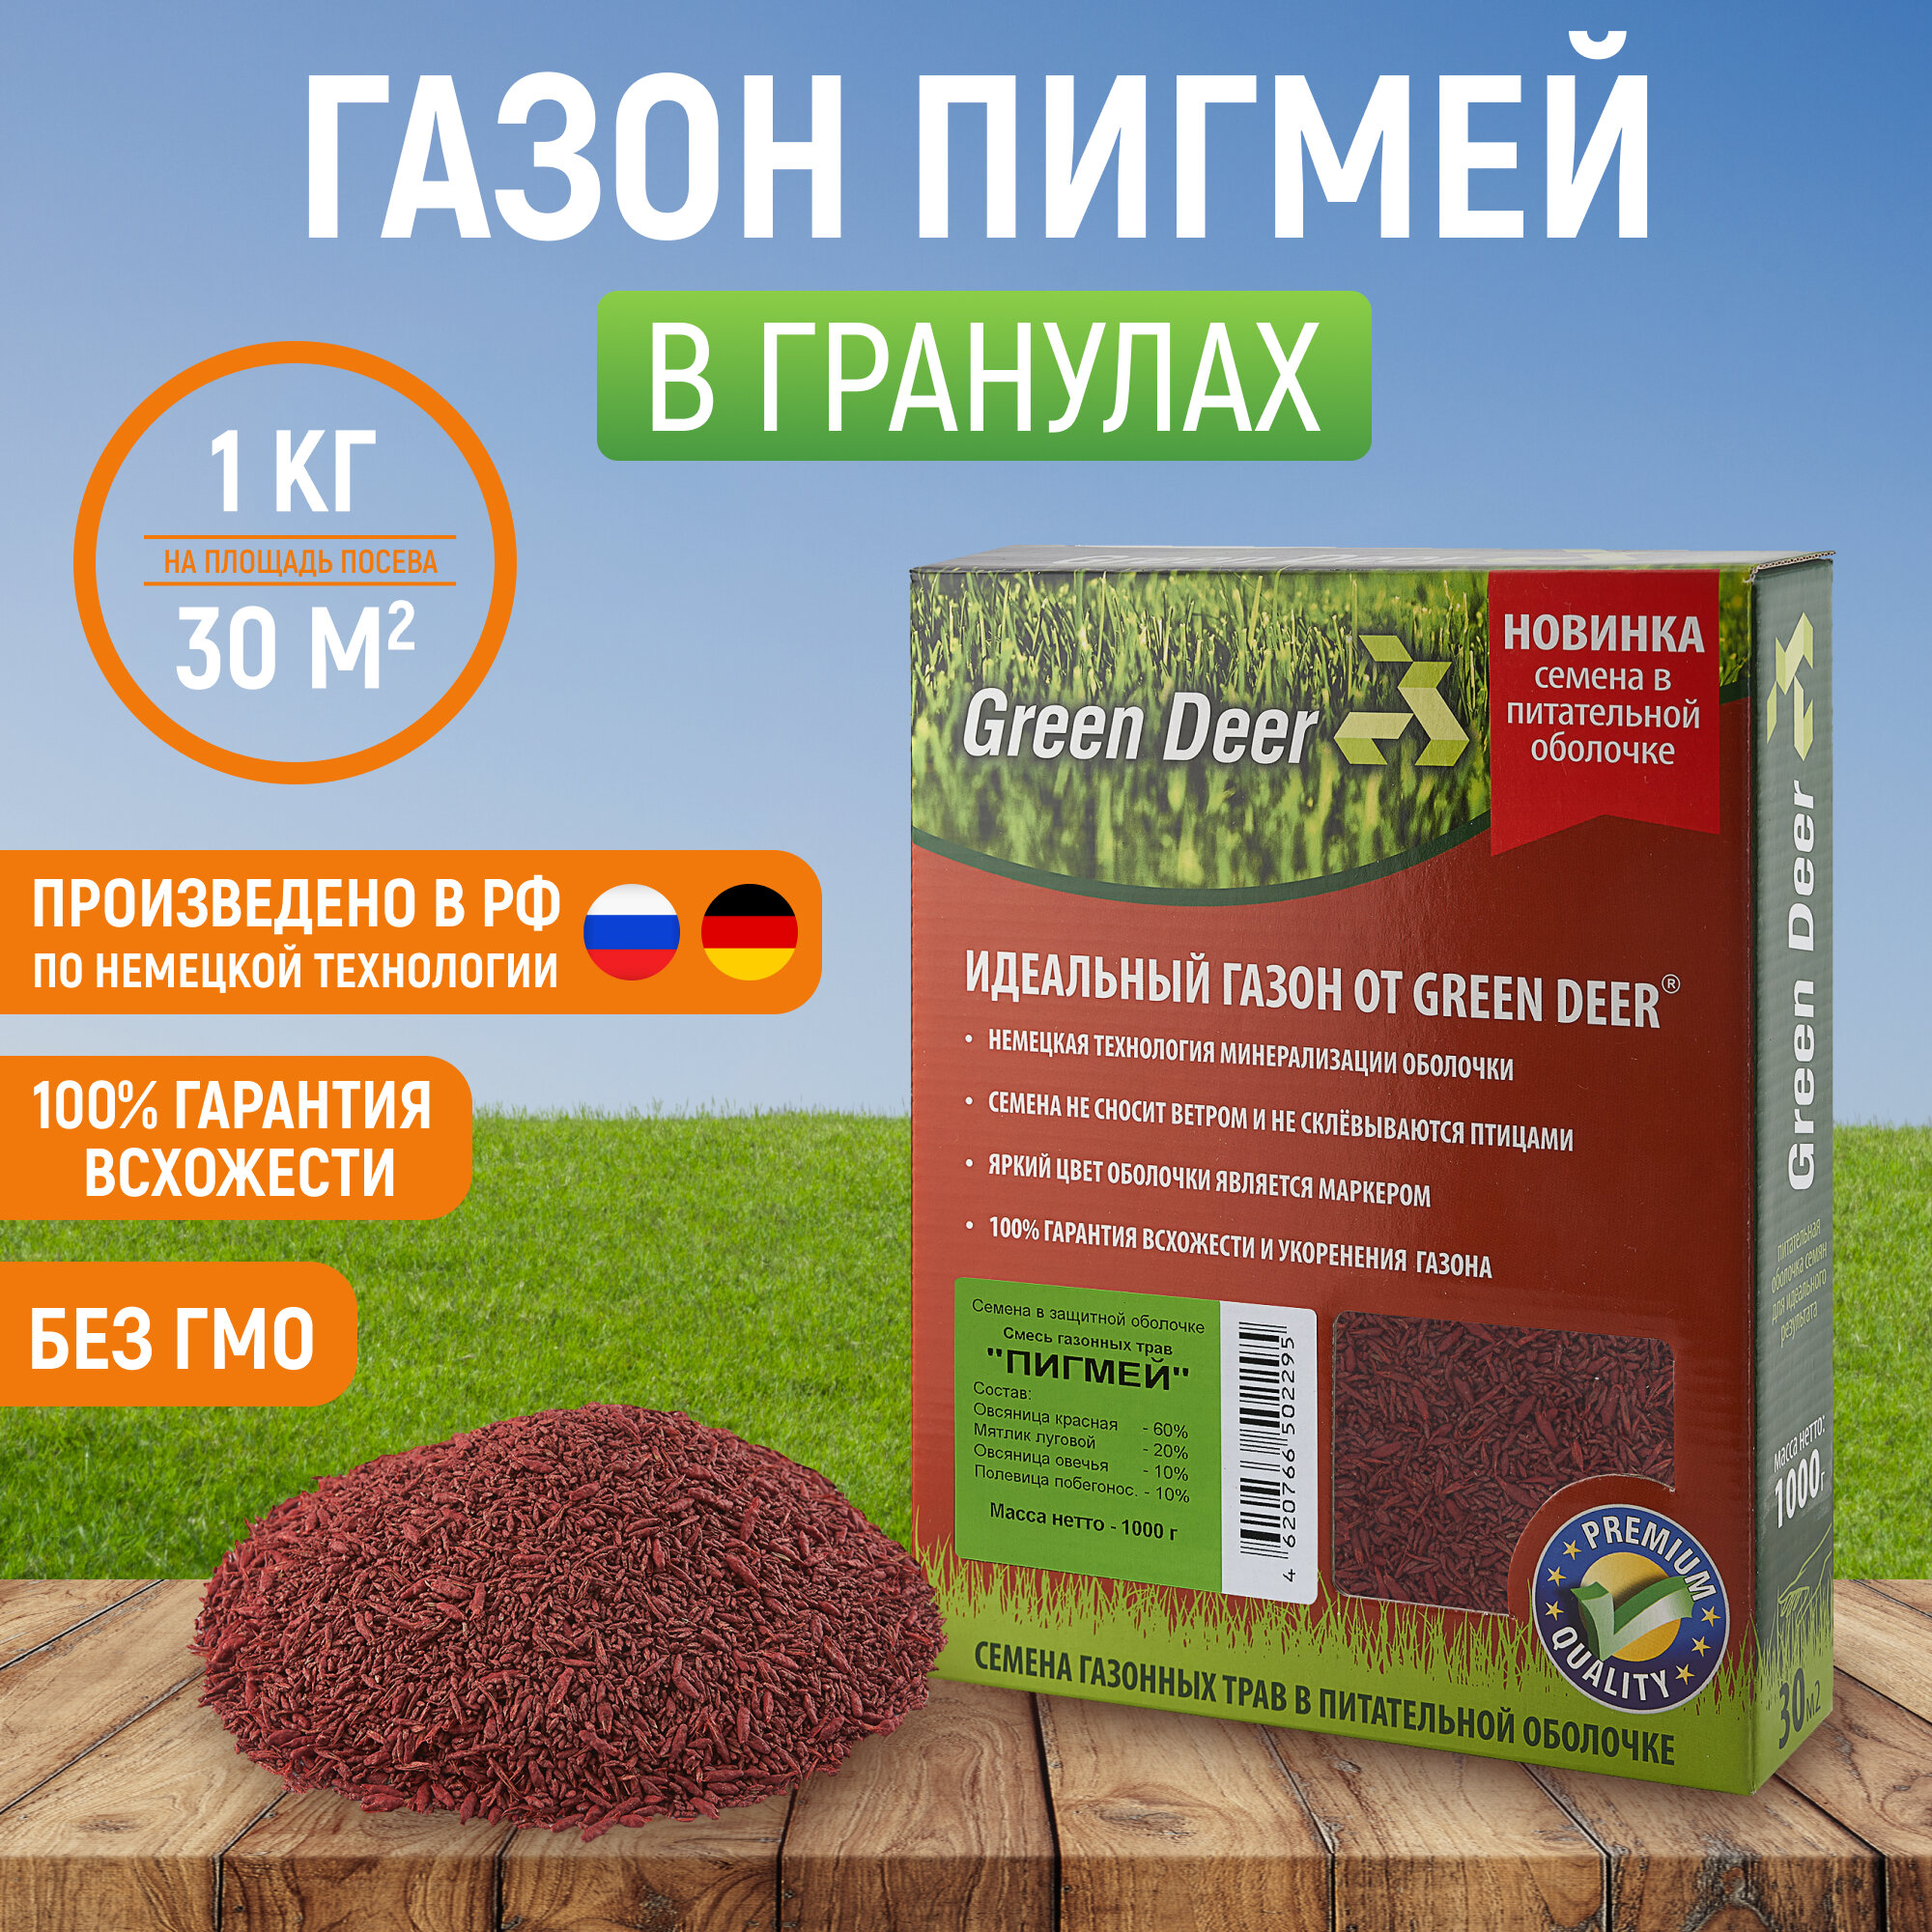 Семена газонных трав "Пигмей" (1 кг) в гранулах. Газон . Green Deer